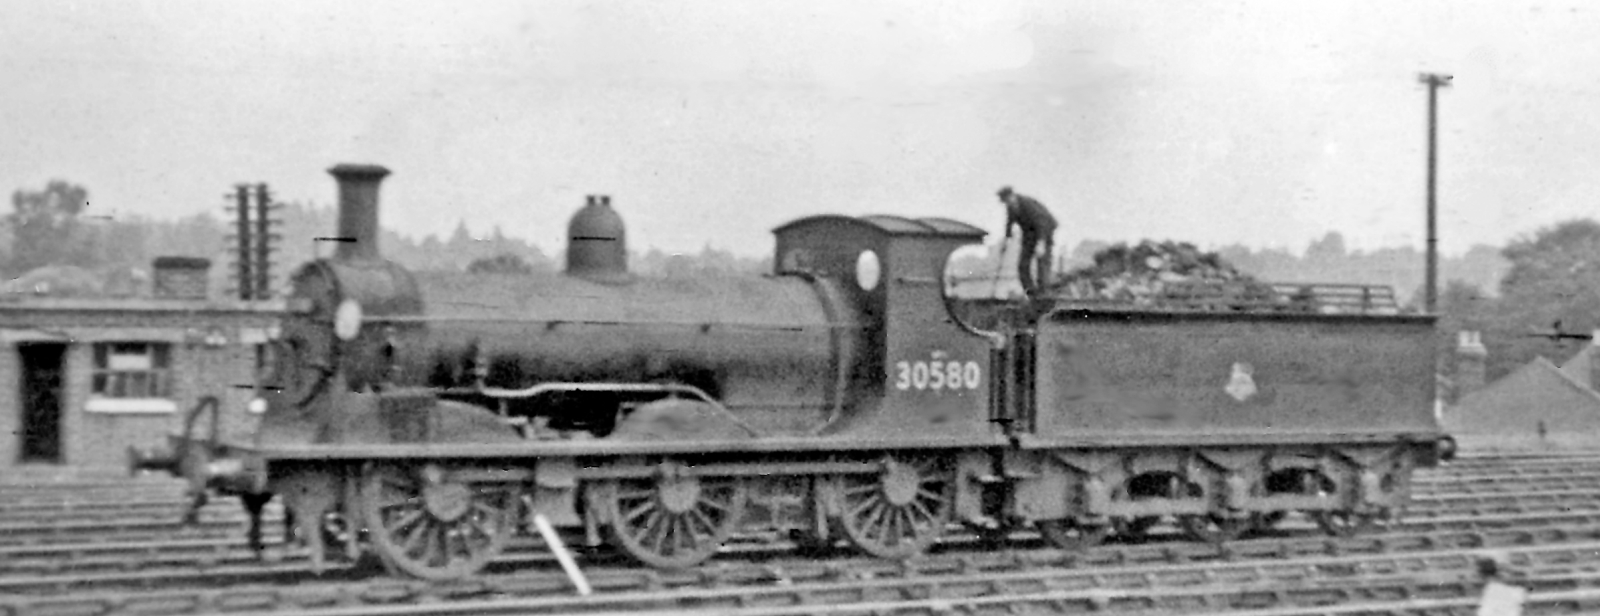 British Railways No. 30580 in July 1955 shunting at Woking